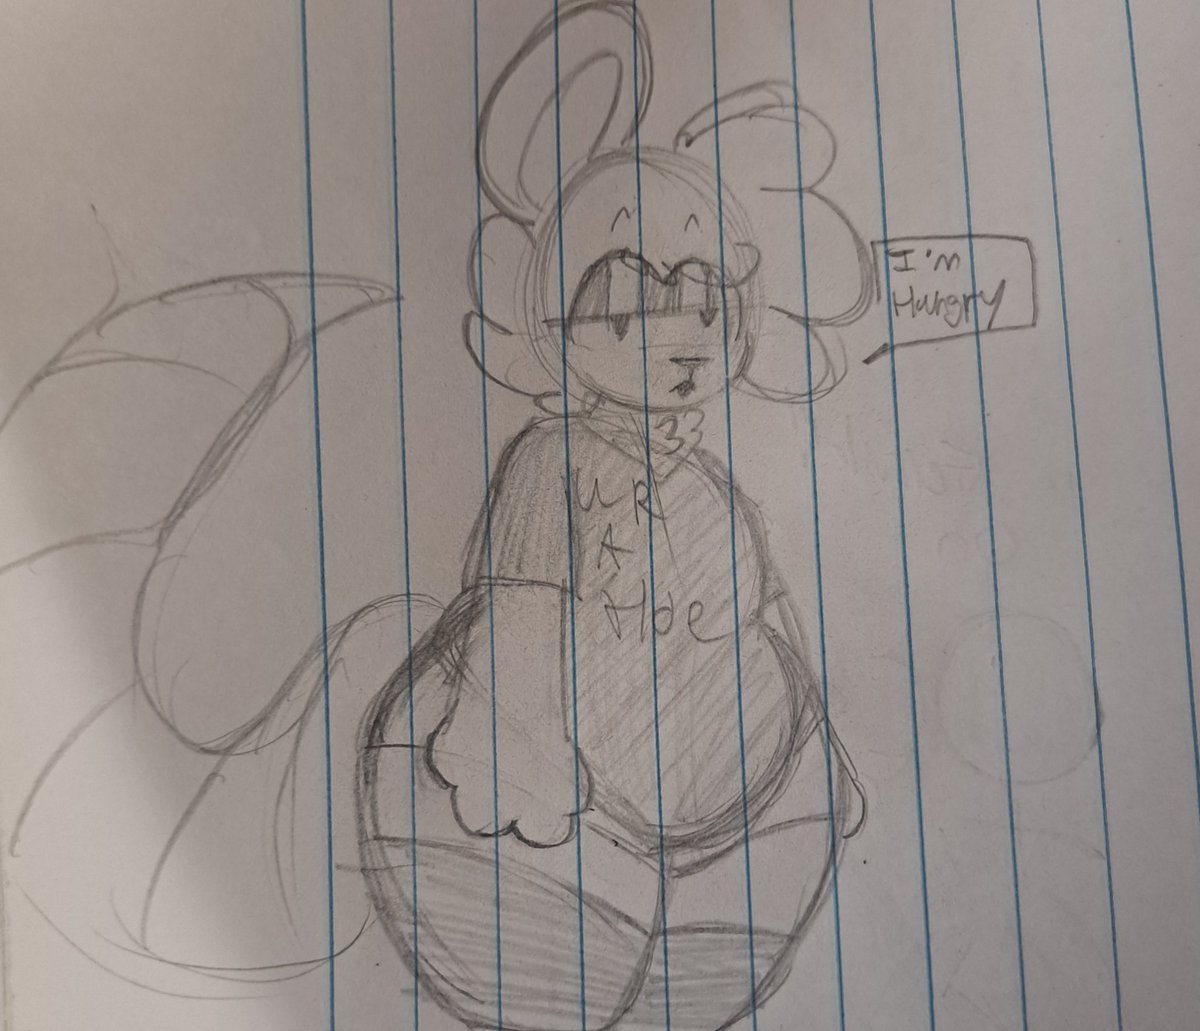 Draw the rat again in art class